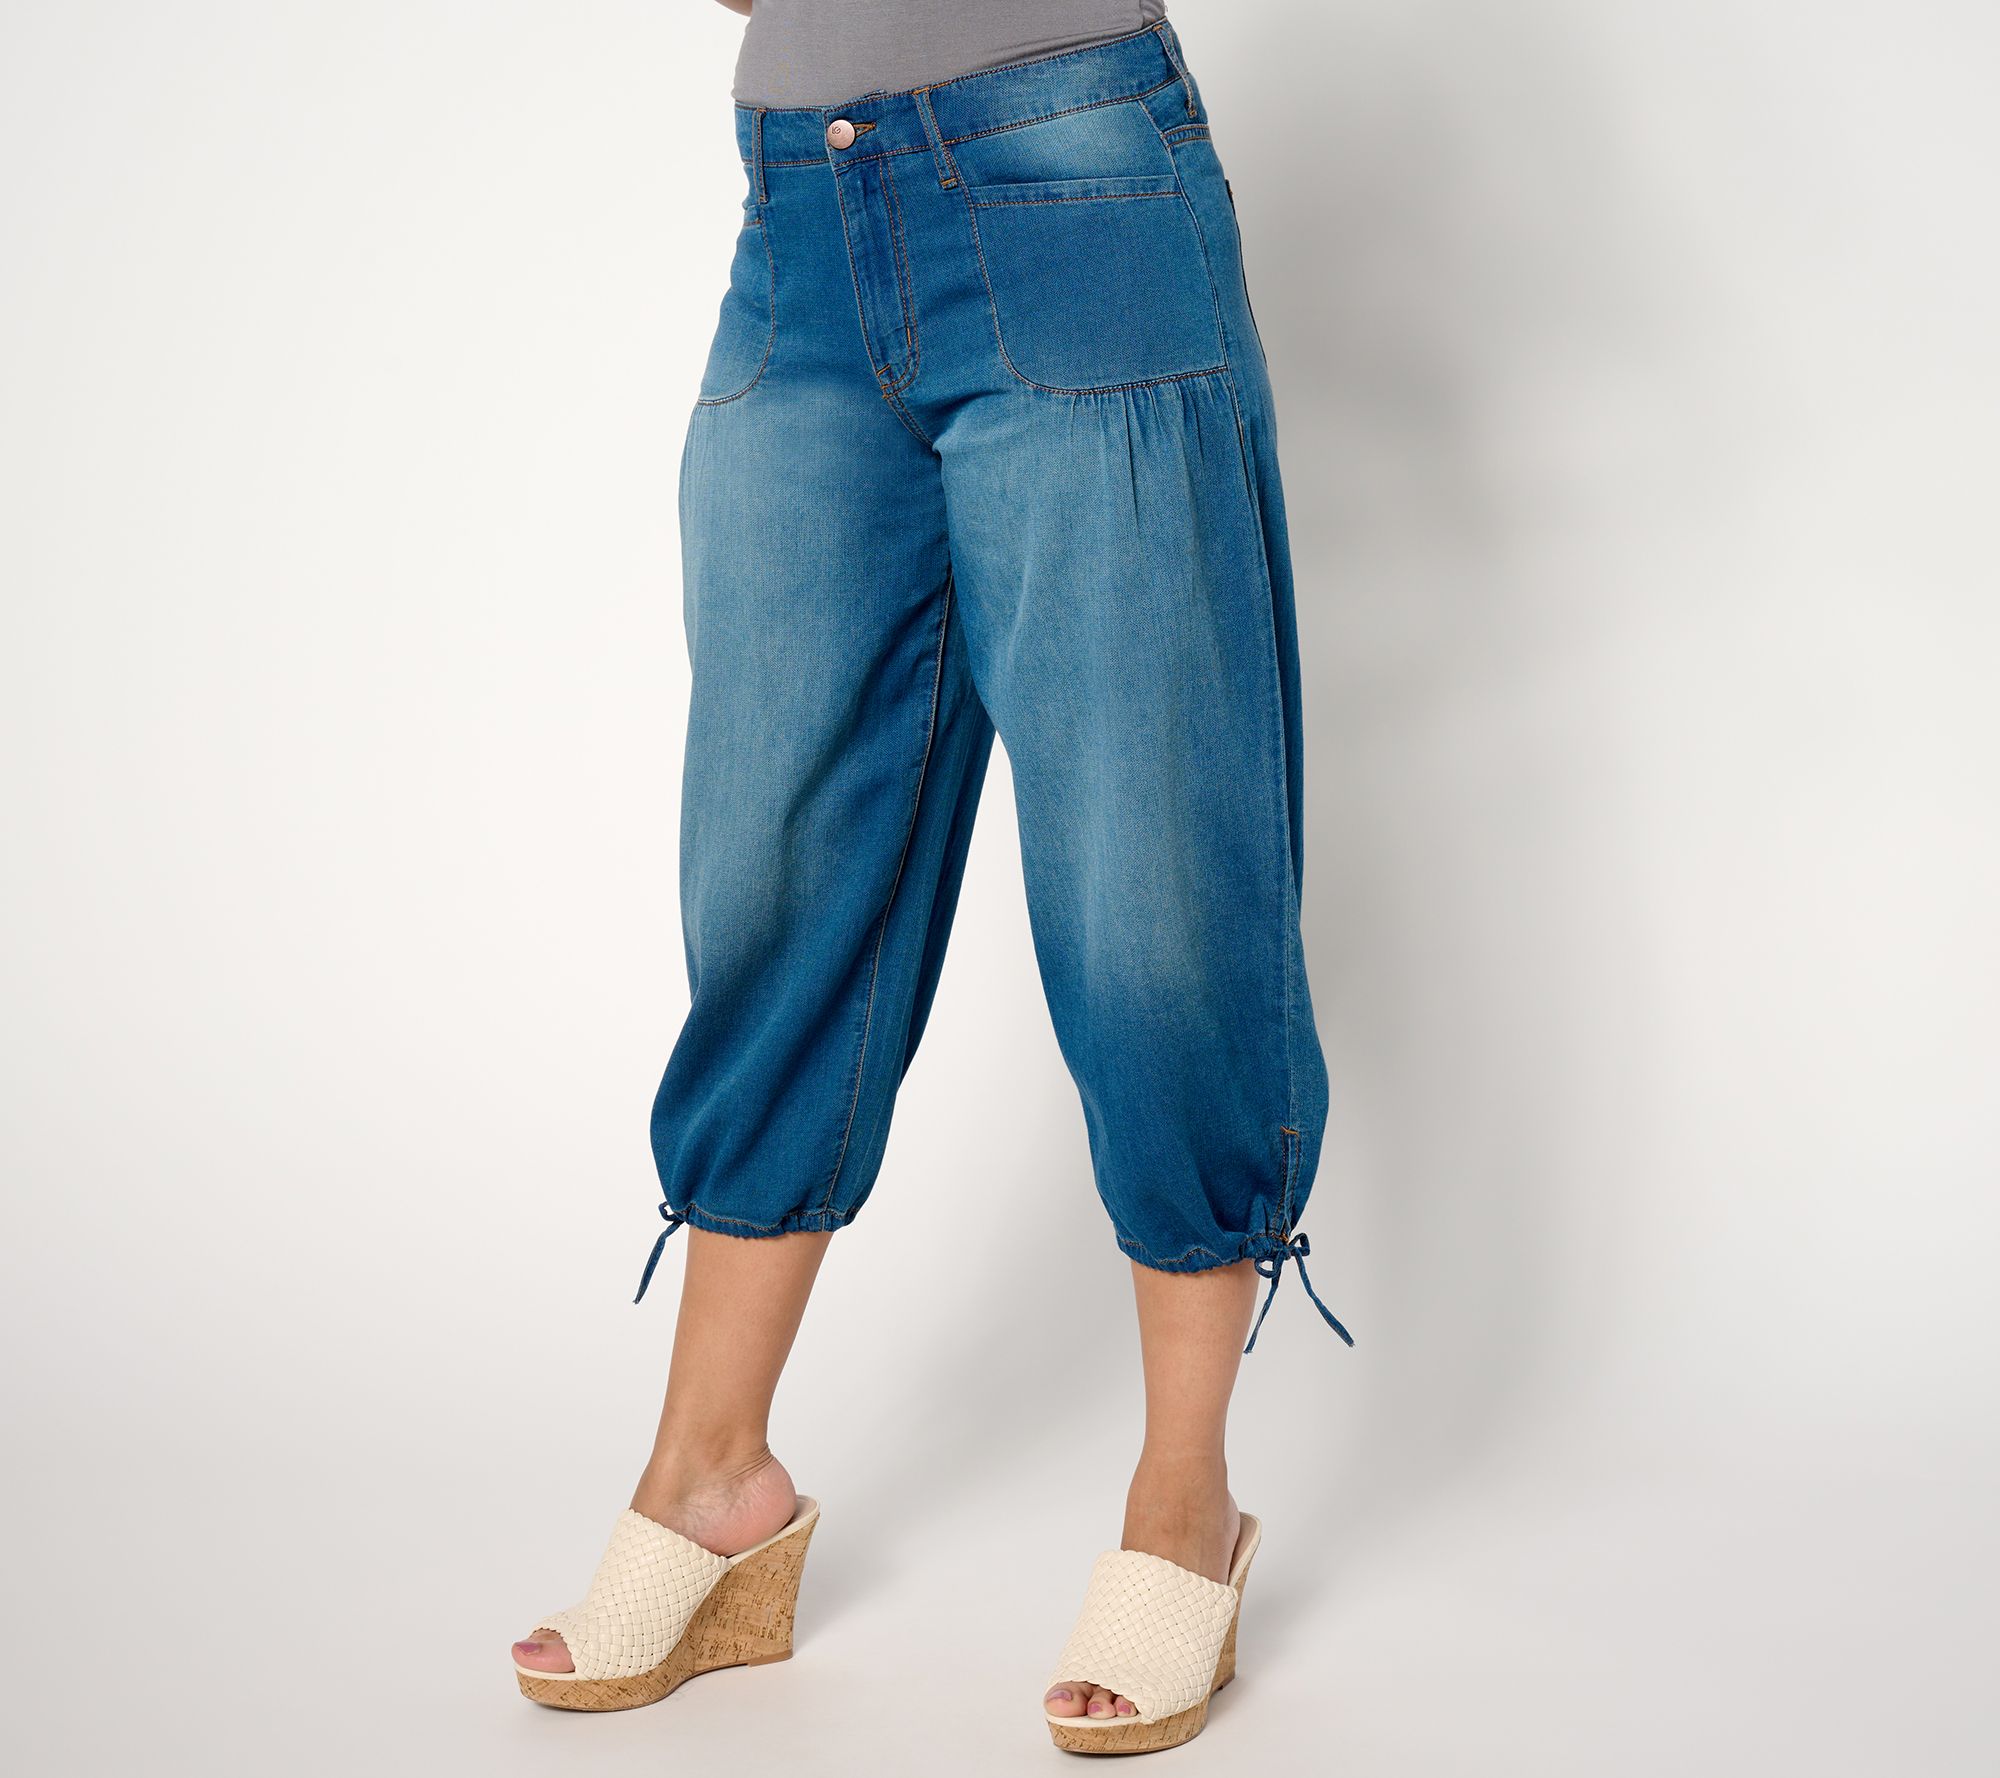 best wide leg jeans for petite women - Anchored In Elegance